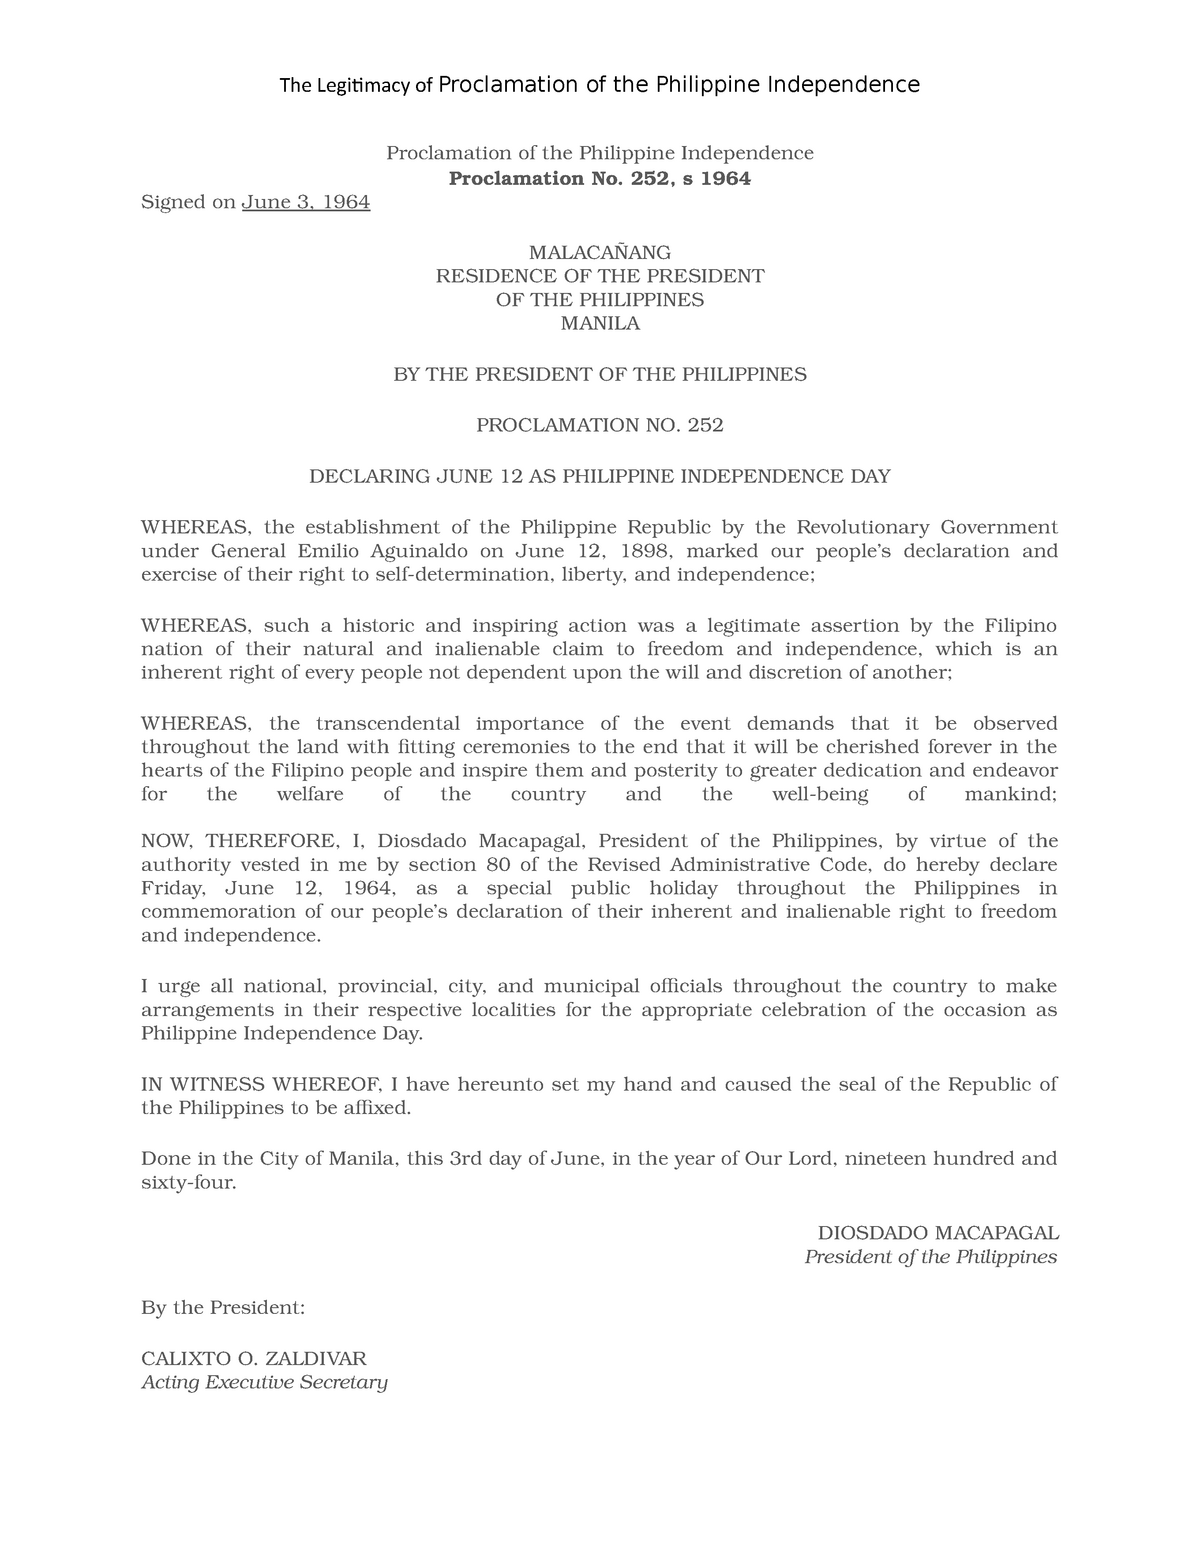 The Legitimacy of the Proclamation of the Philippine Independence StuDocu